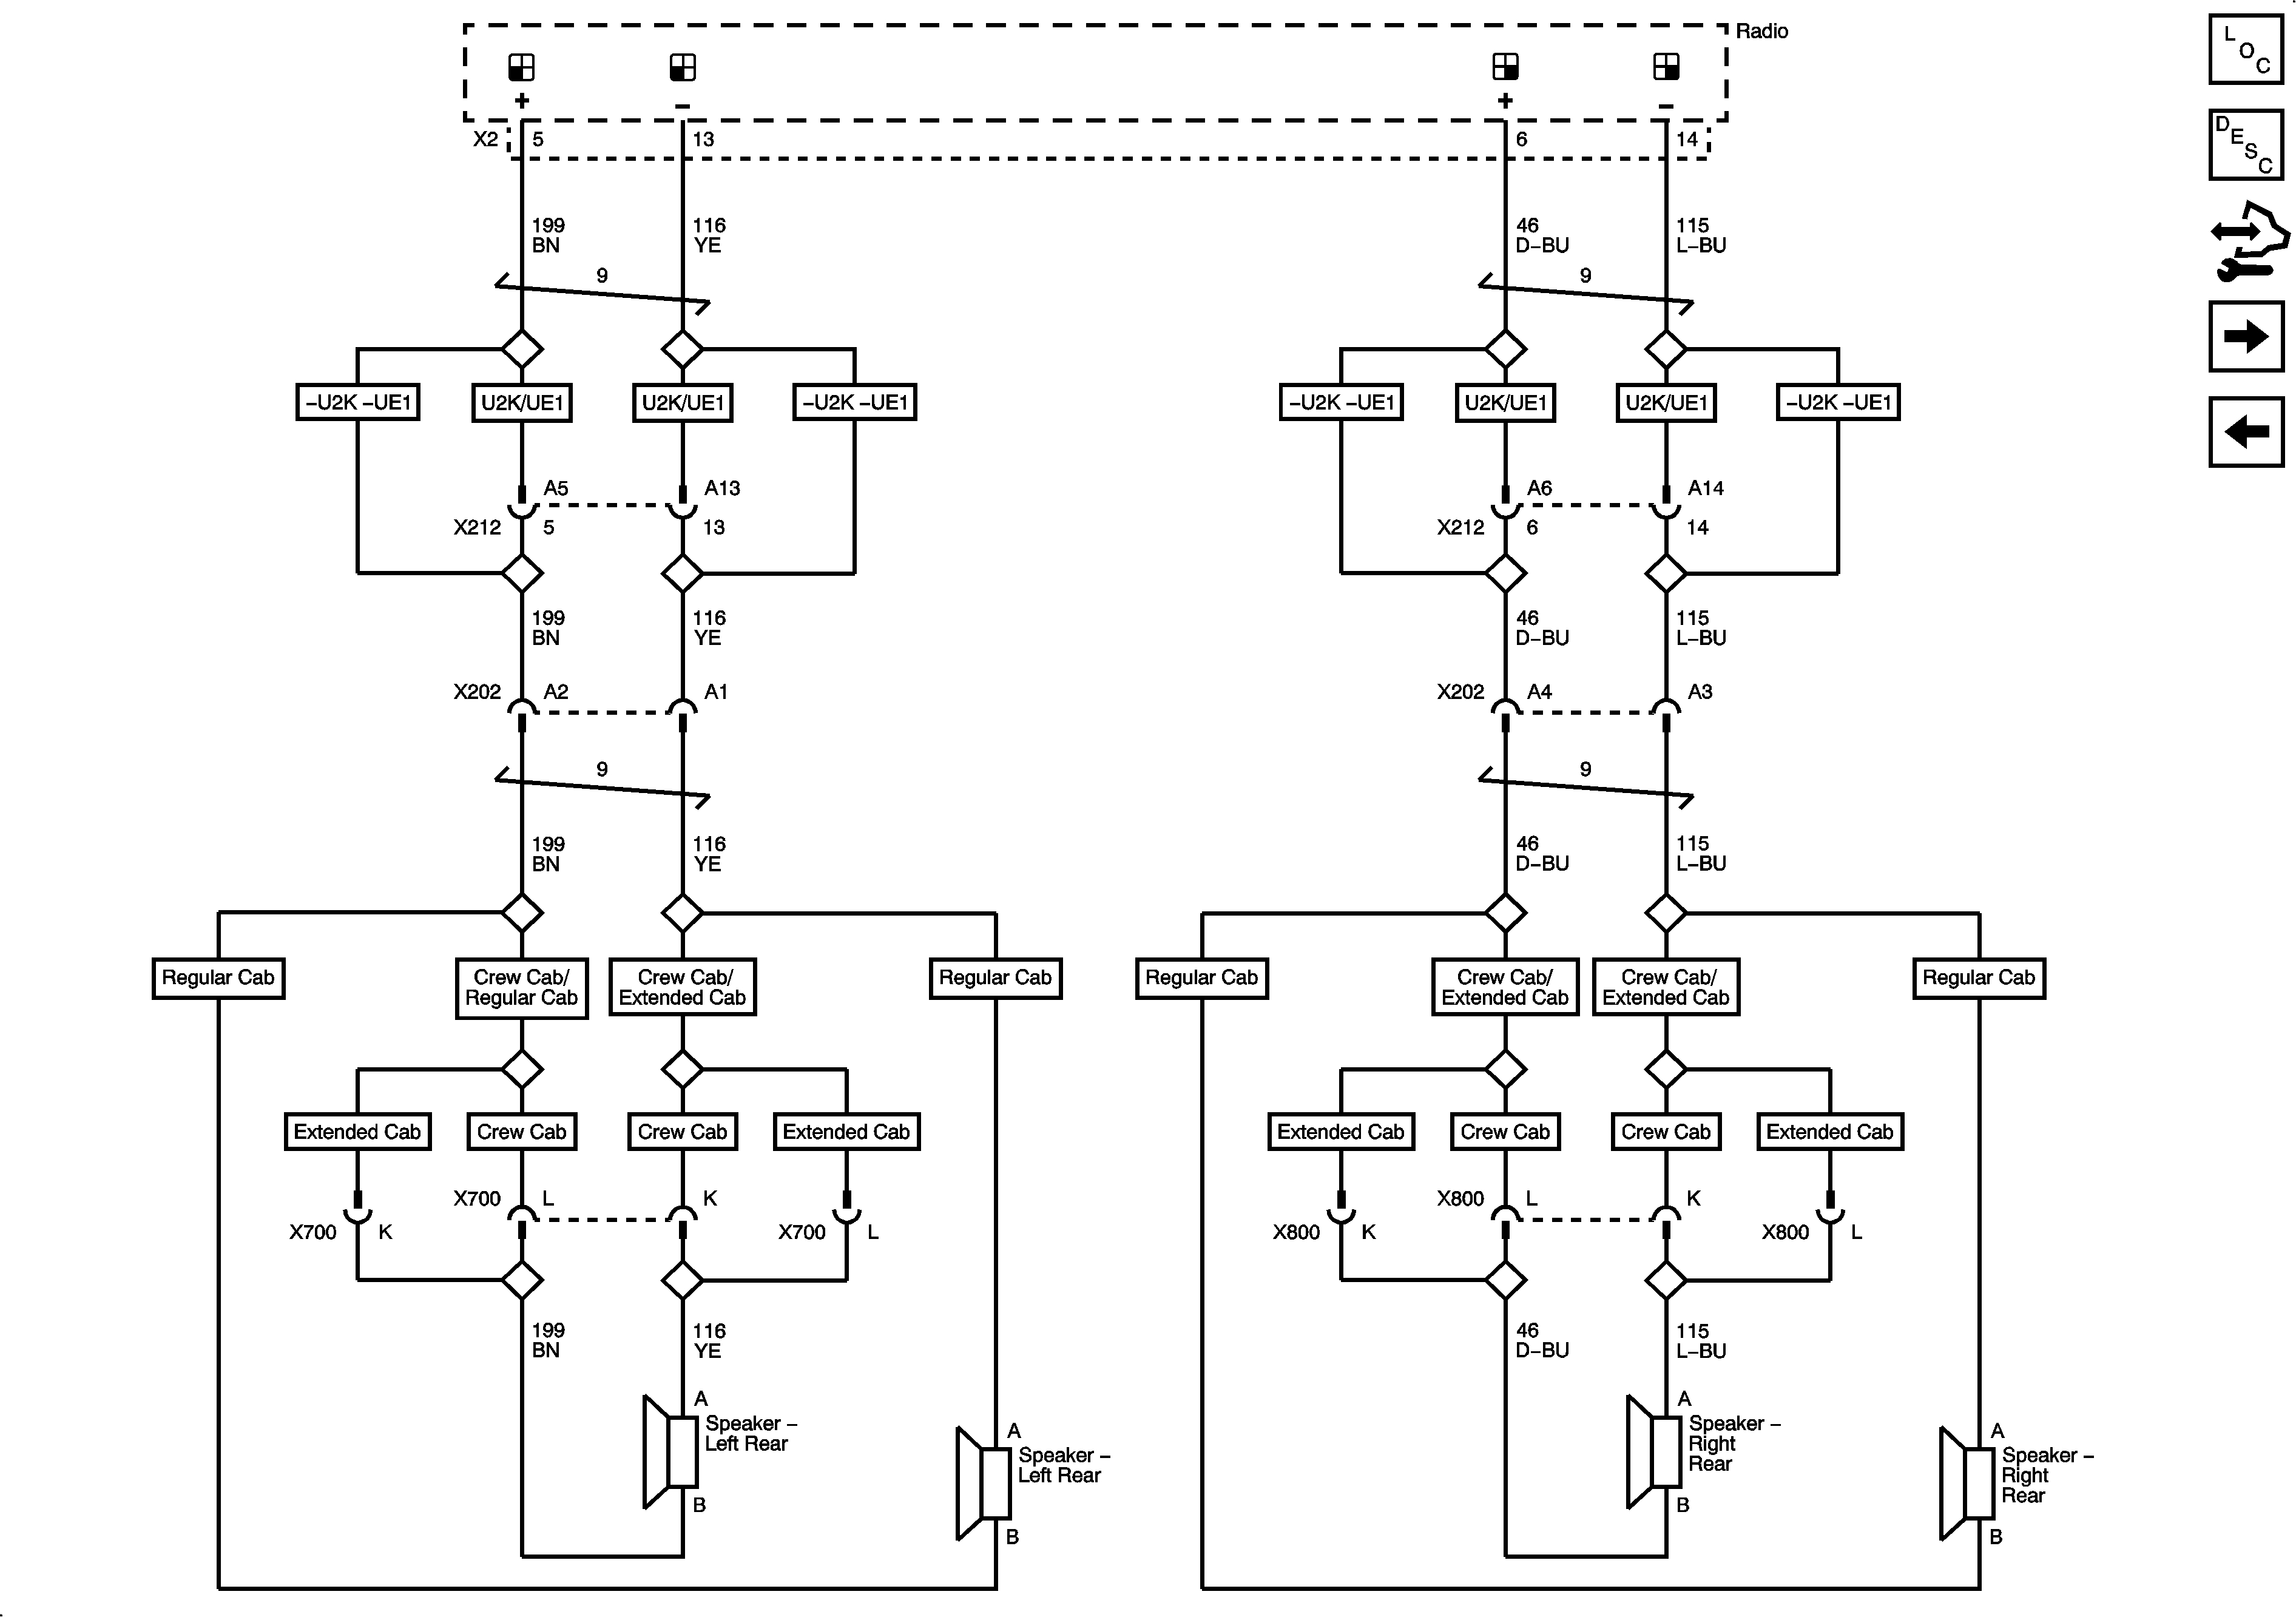 Lutron Diva Cl Wiring Diagram Download | Wiring Diagram Sample 2007 chevrolet silverado stereo wiring diagram 